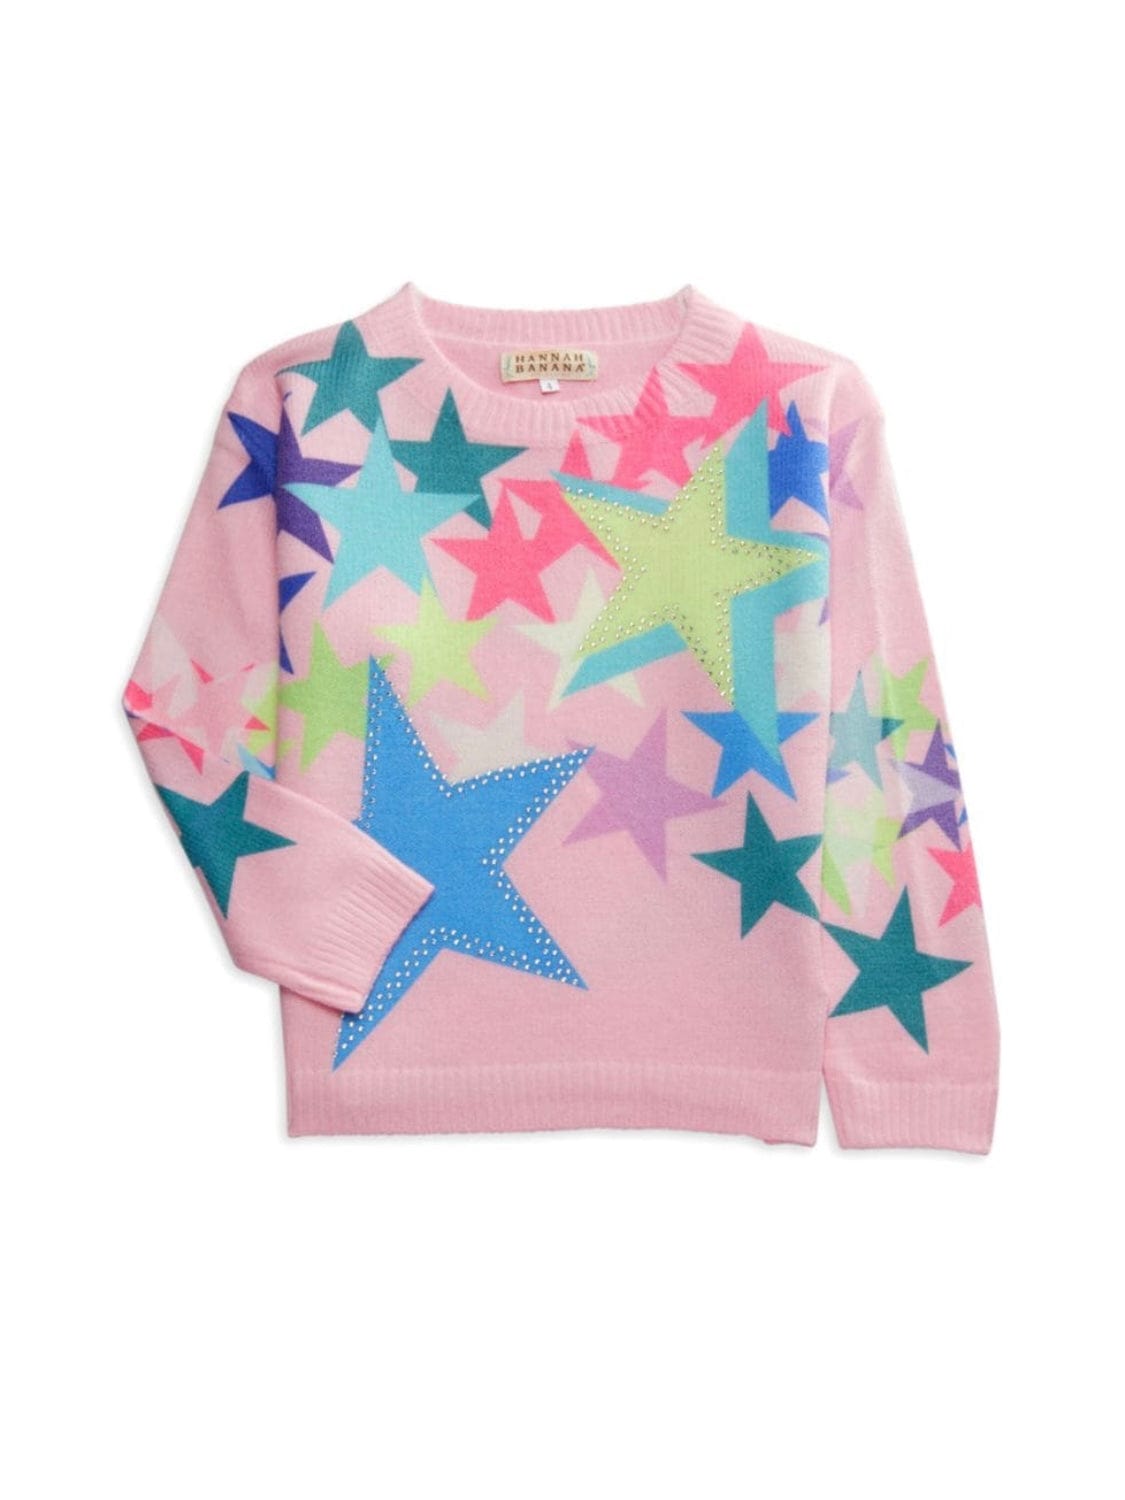 Fashionably, BBK! 10 Girls Embellished Star Sweater